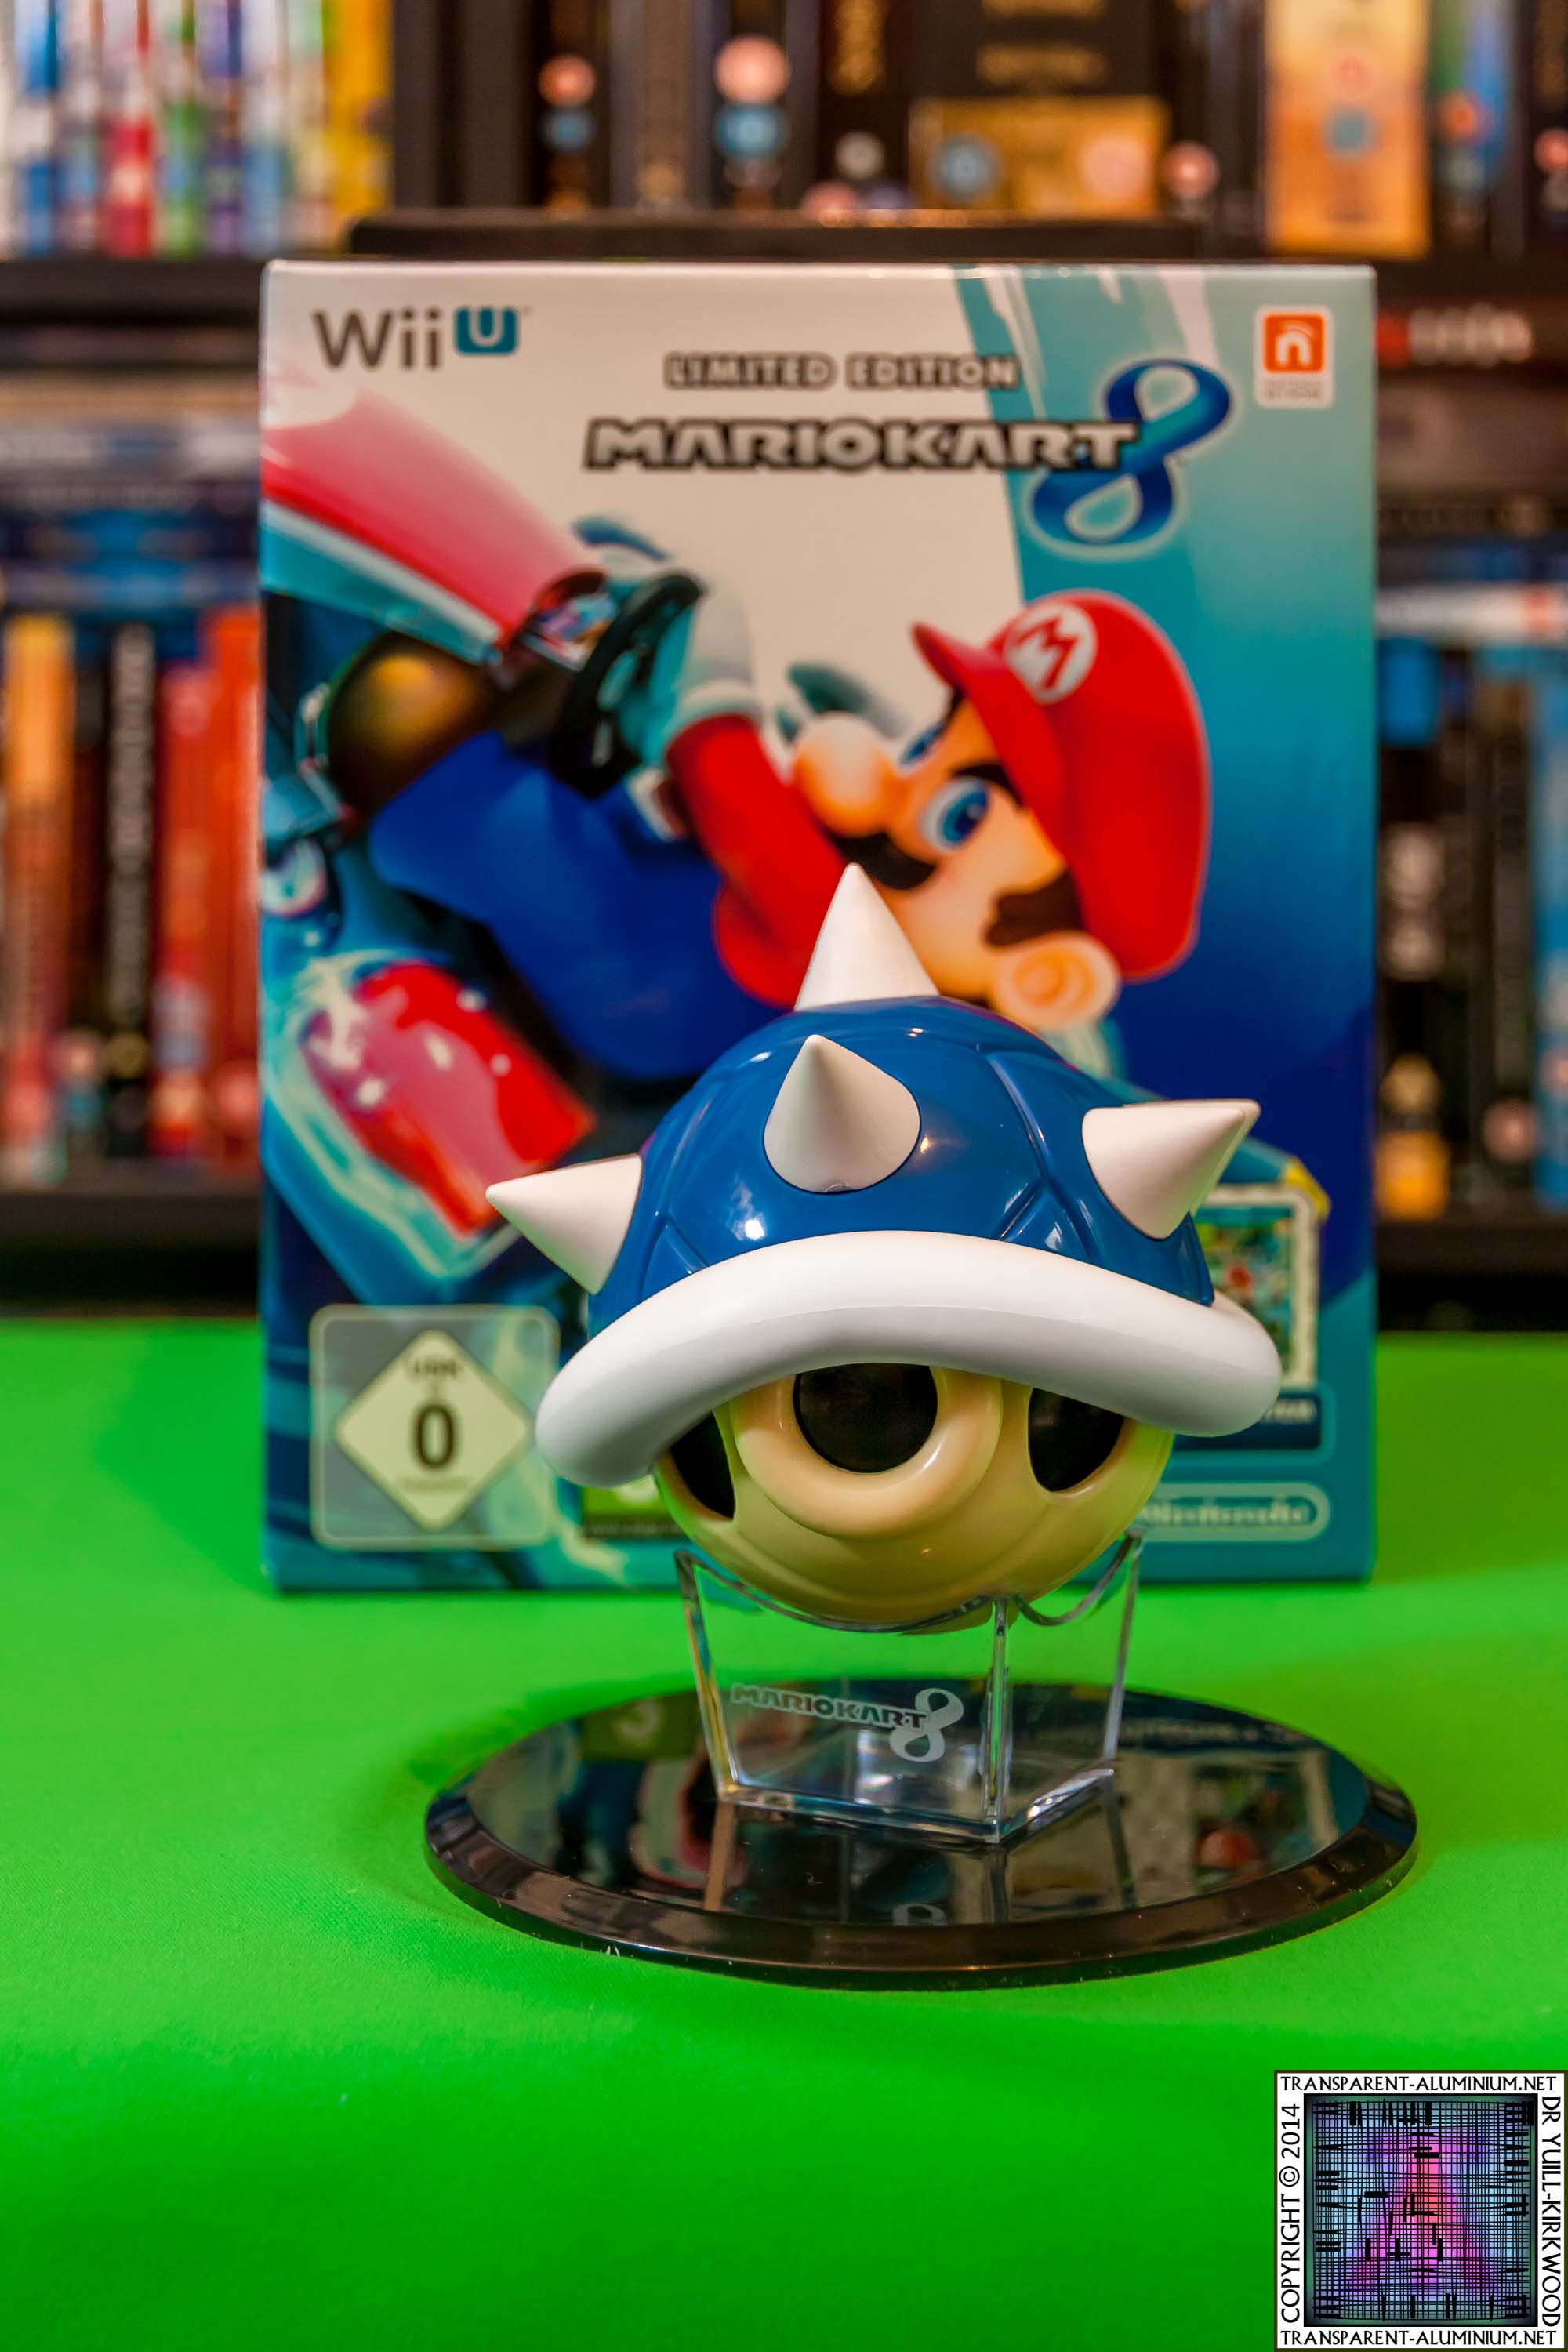 Mario Kart 8 Limited Edition (with Blue Shell Figurine) (Nintendo Wii U)